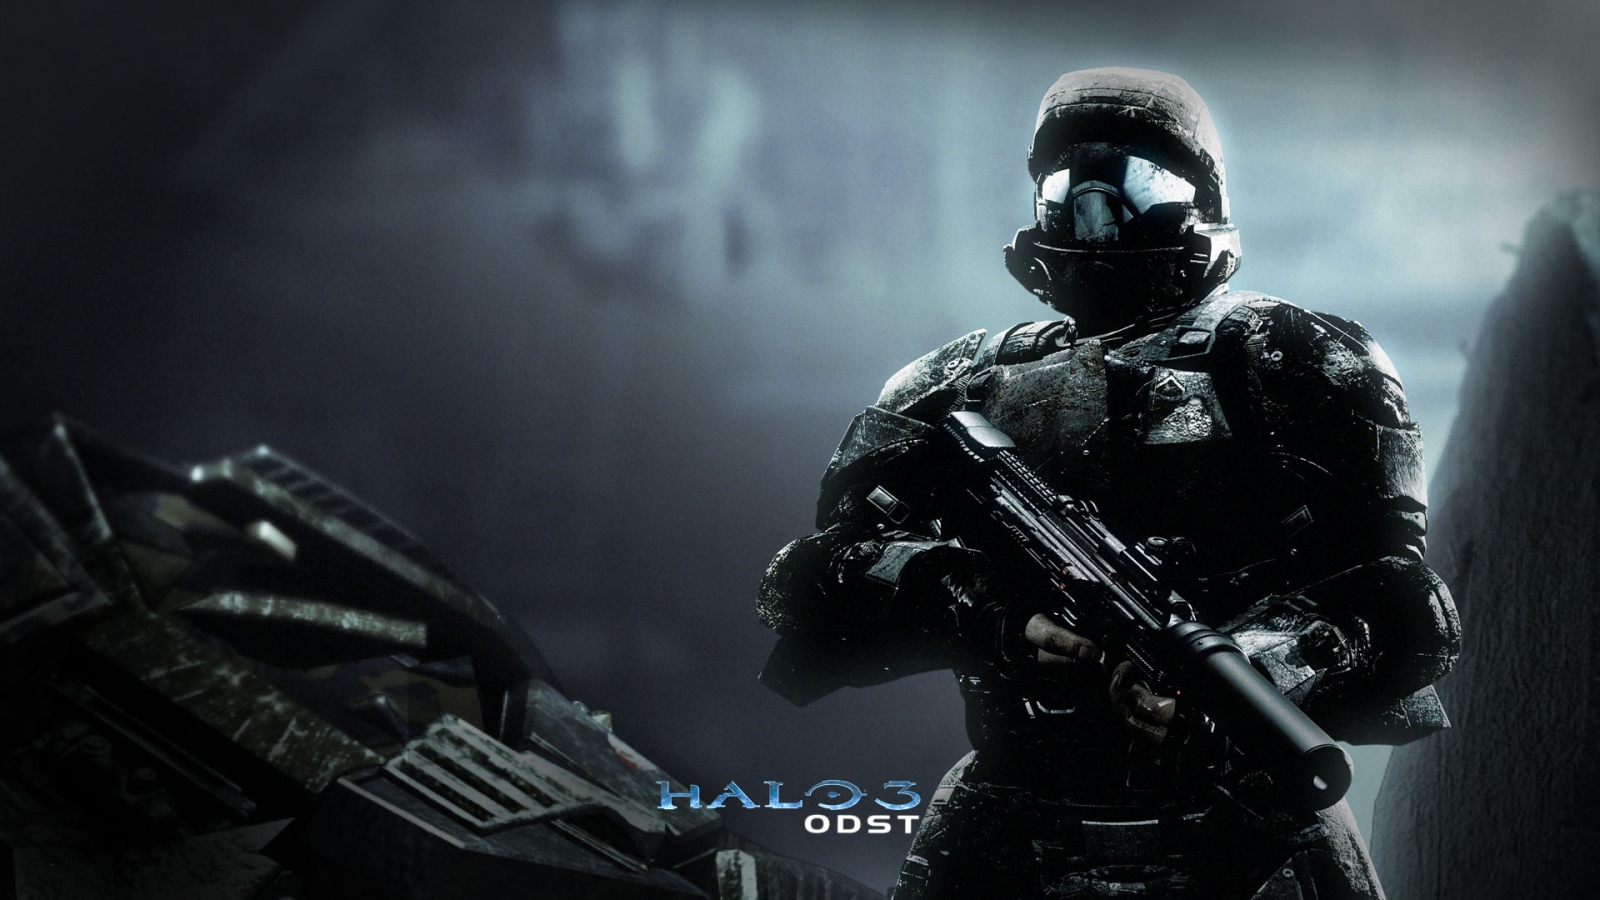 Halo 3 ODST for 1600 x 900 HDTV resolution